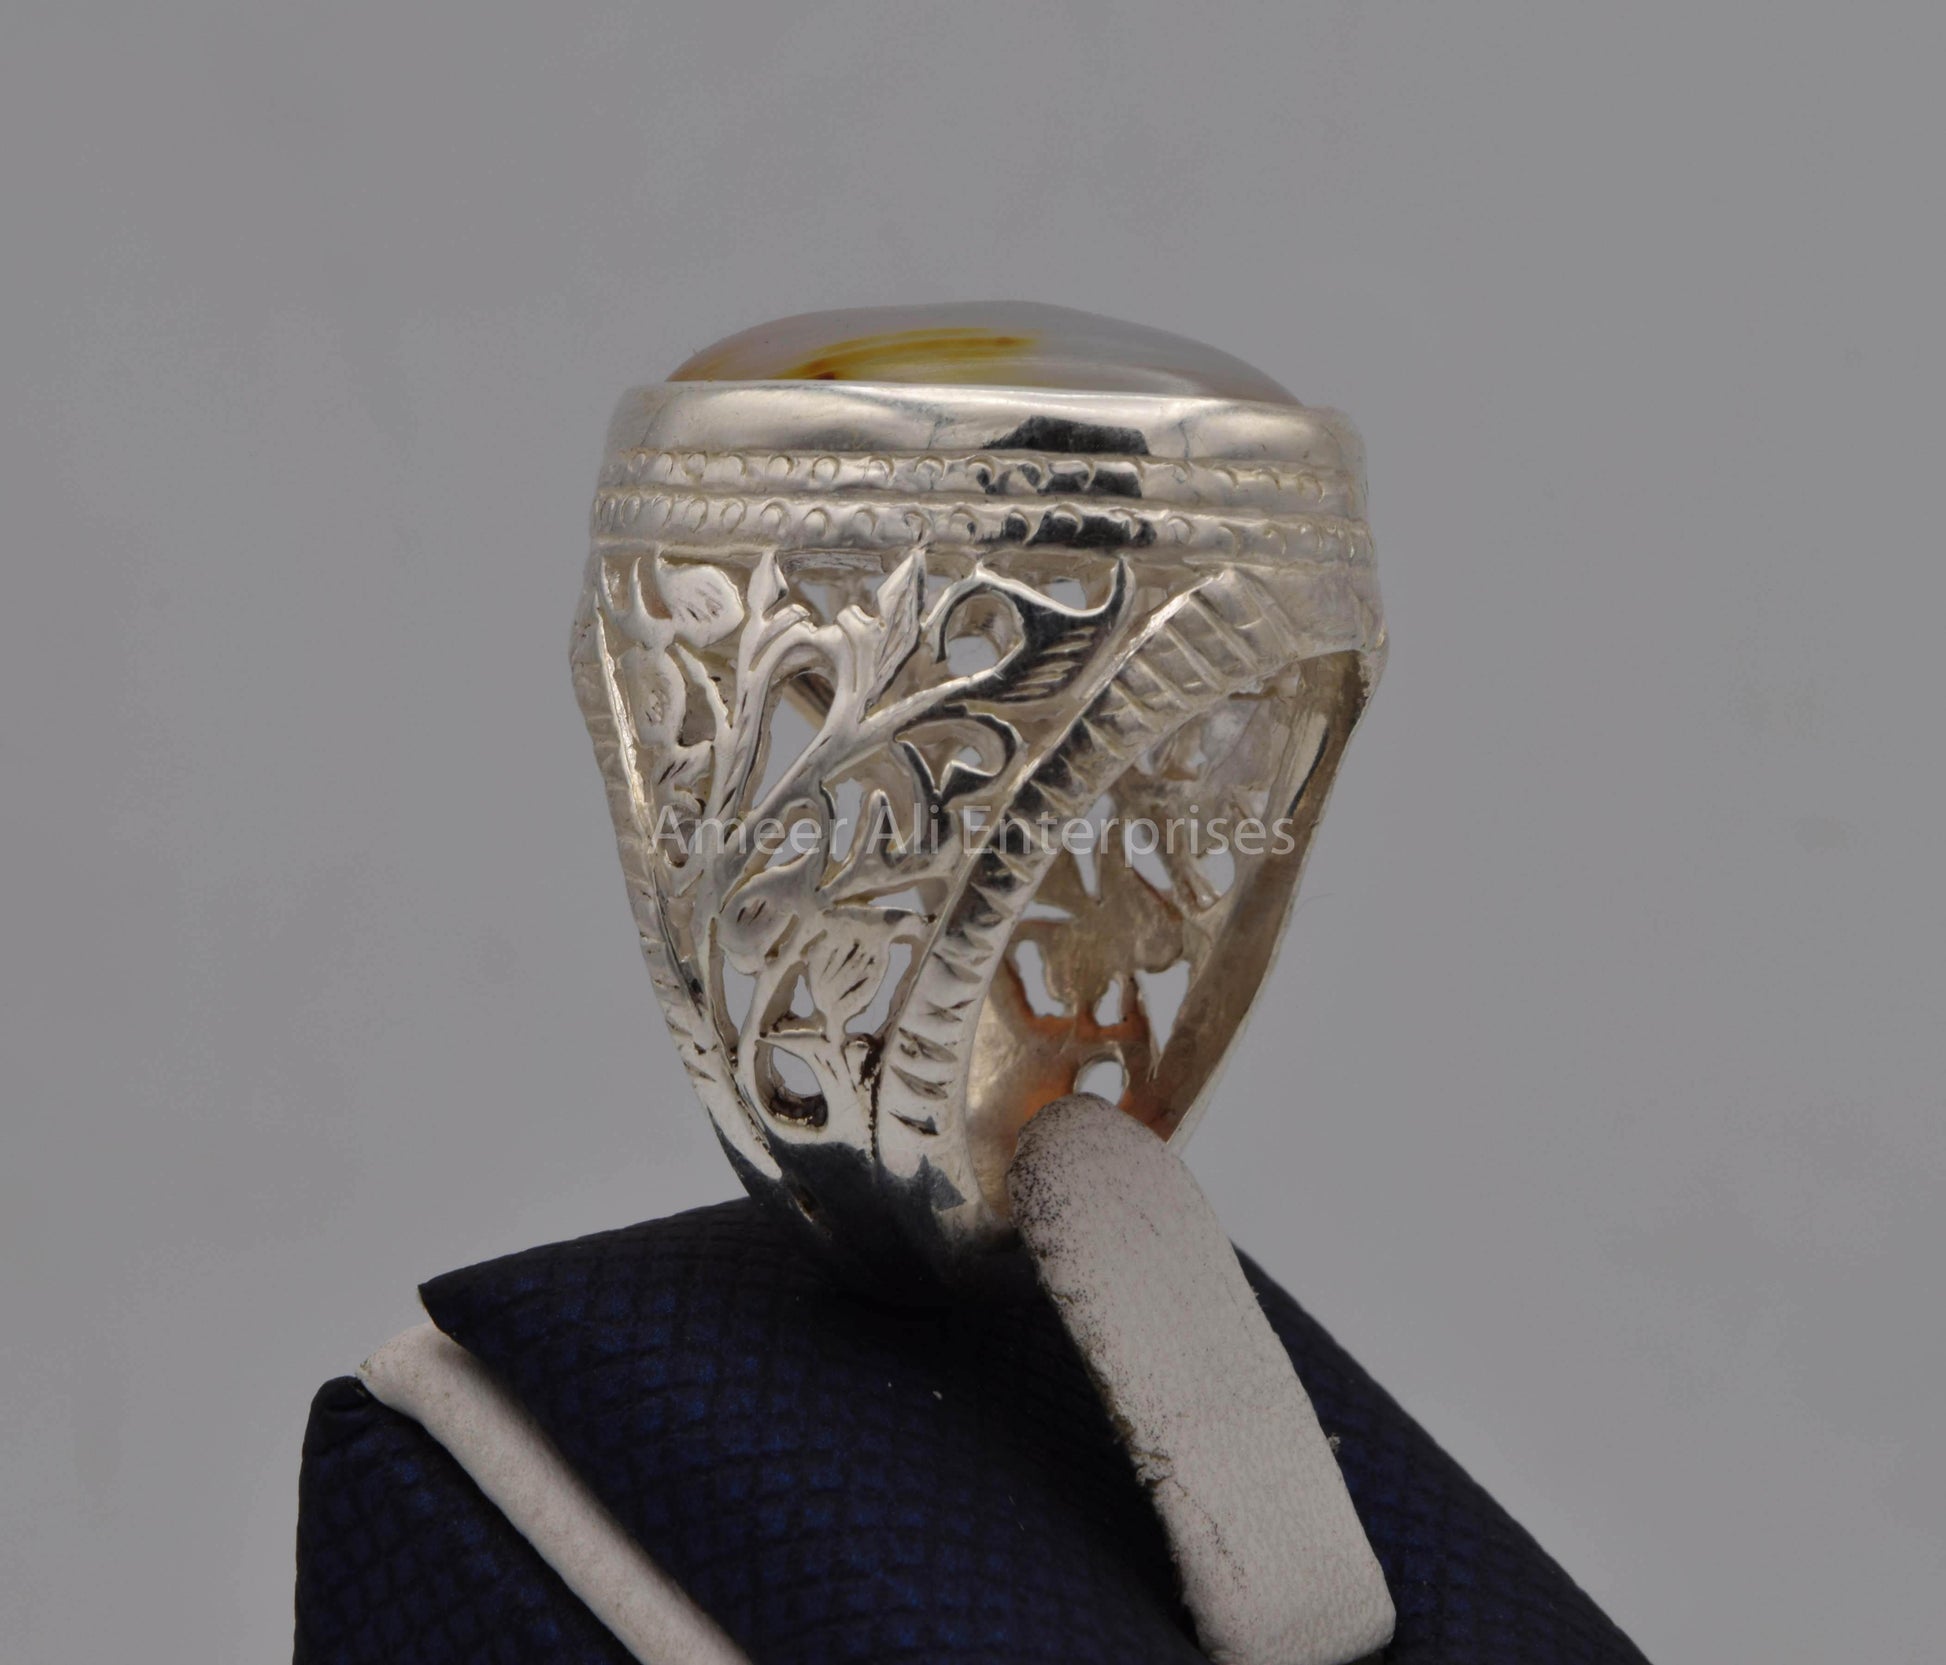 AAE 5635 Chandi Ring 925, Stone: Sulemani Aqeeq - AmeerAliEnterprises